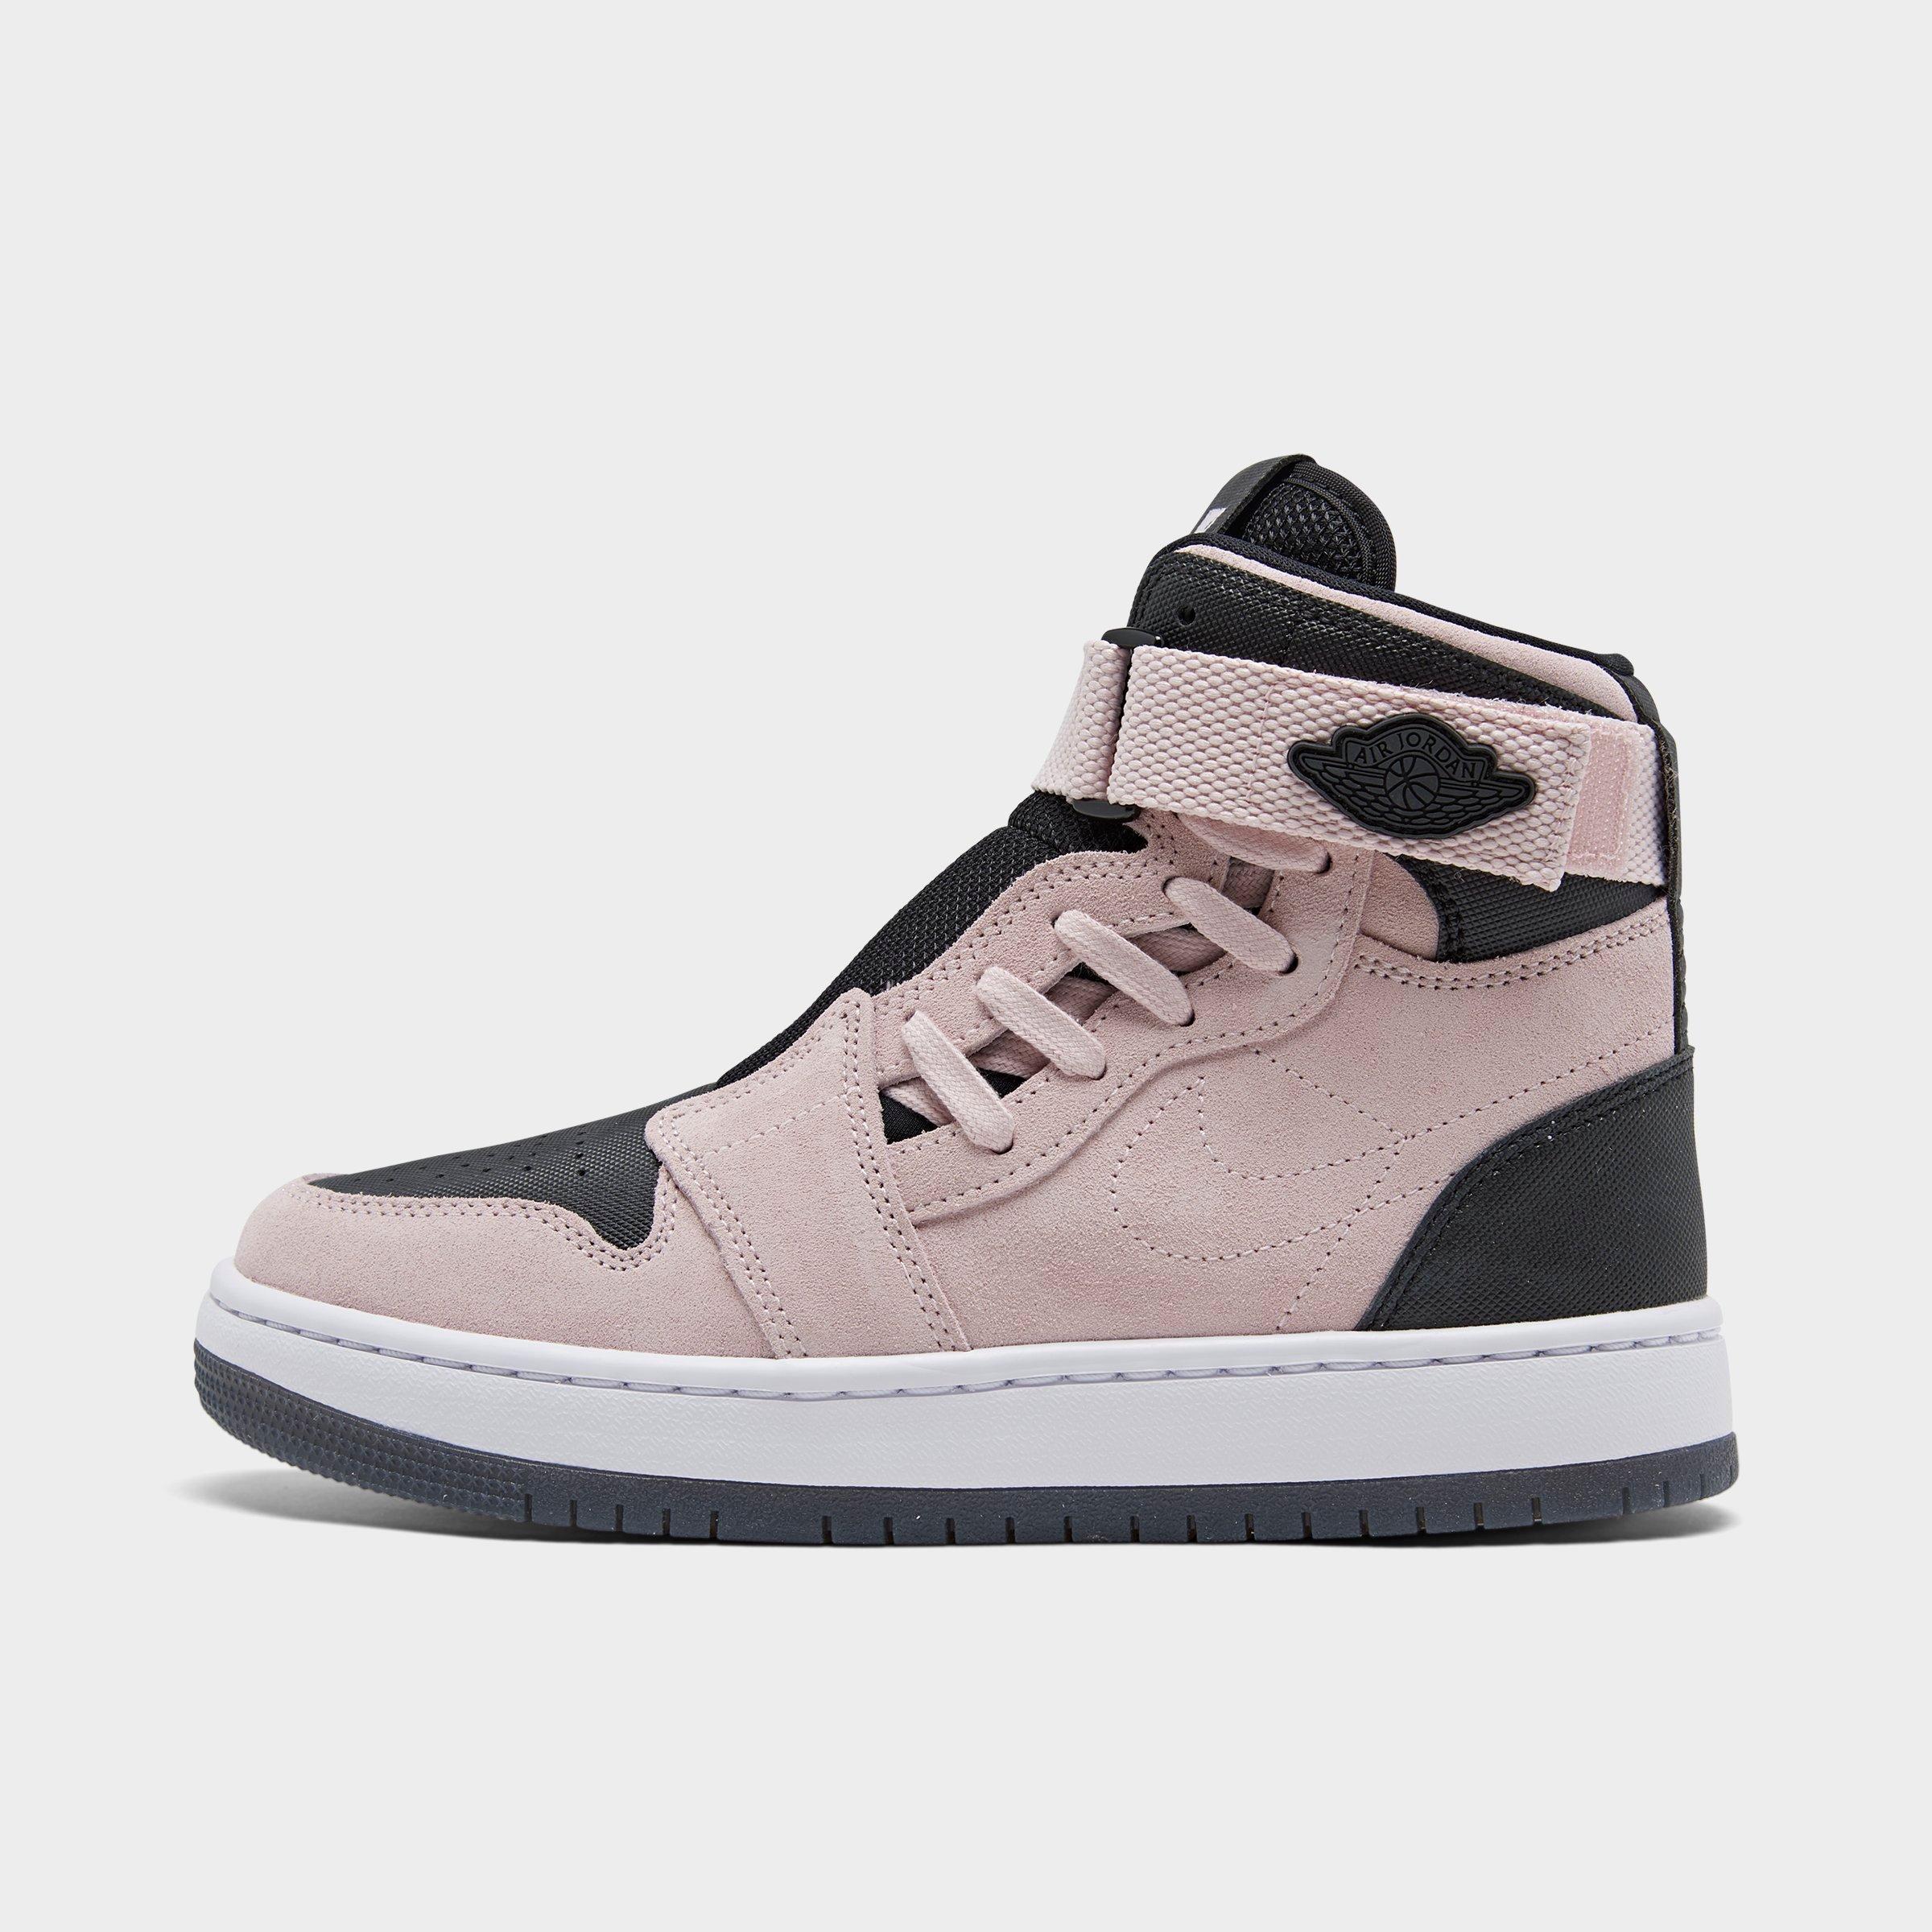 Air Jordan 1 Nova XX Women's Shoe.